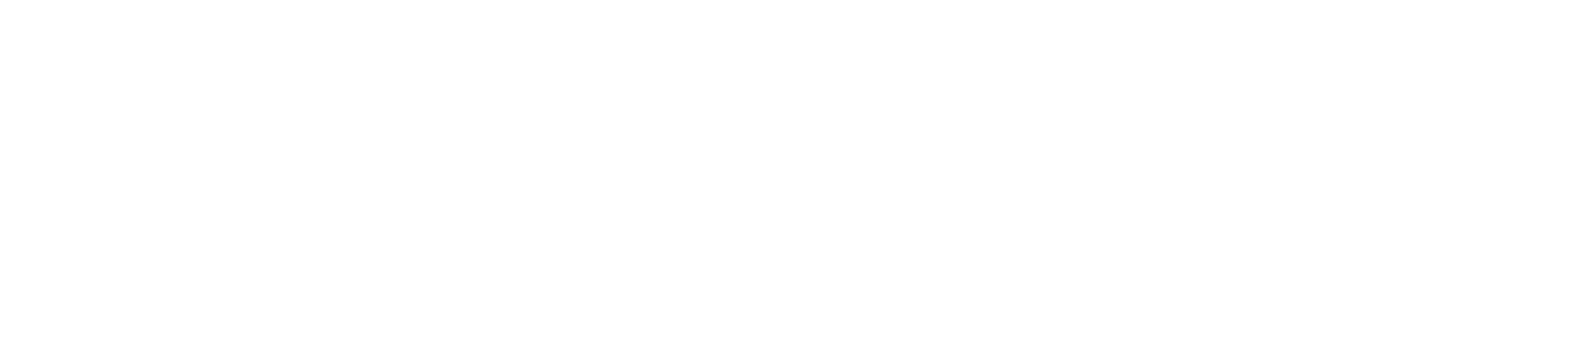 Synopsys Logo groß für dunkle Hintergründe (transparentes PNG)